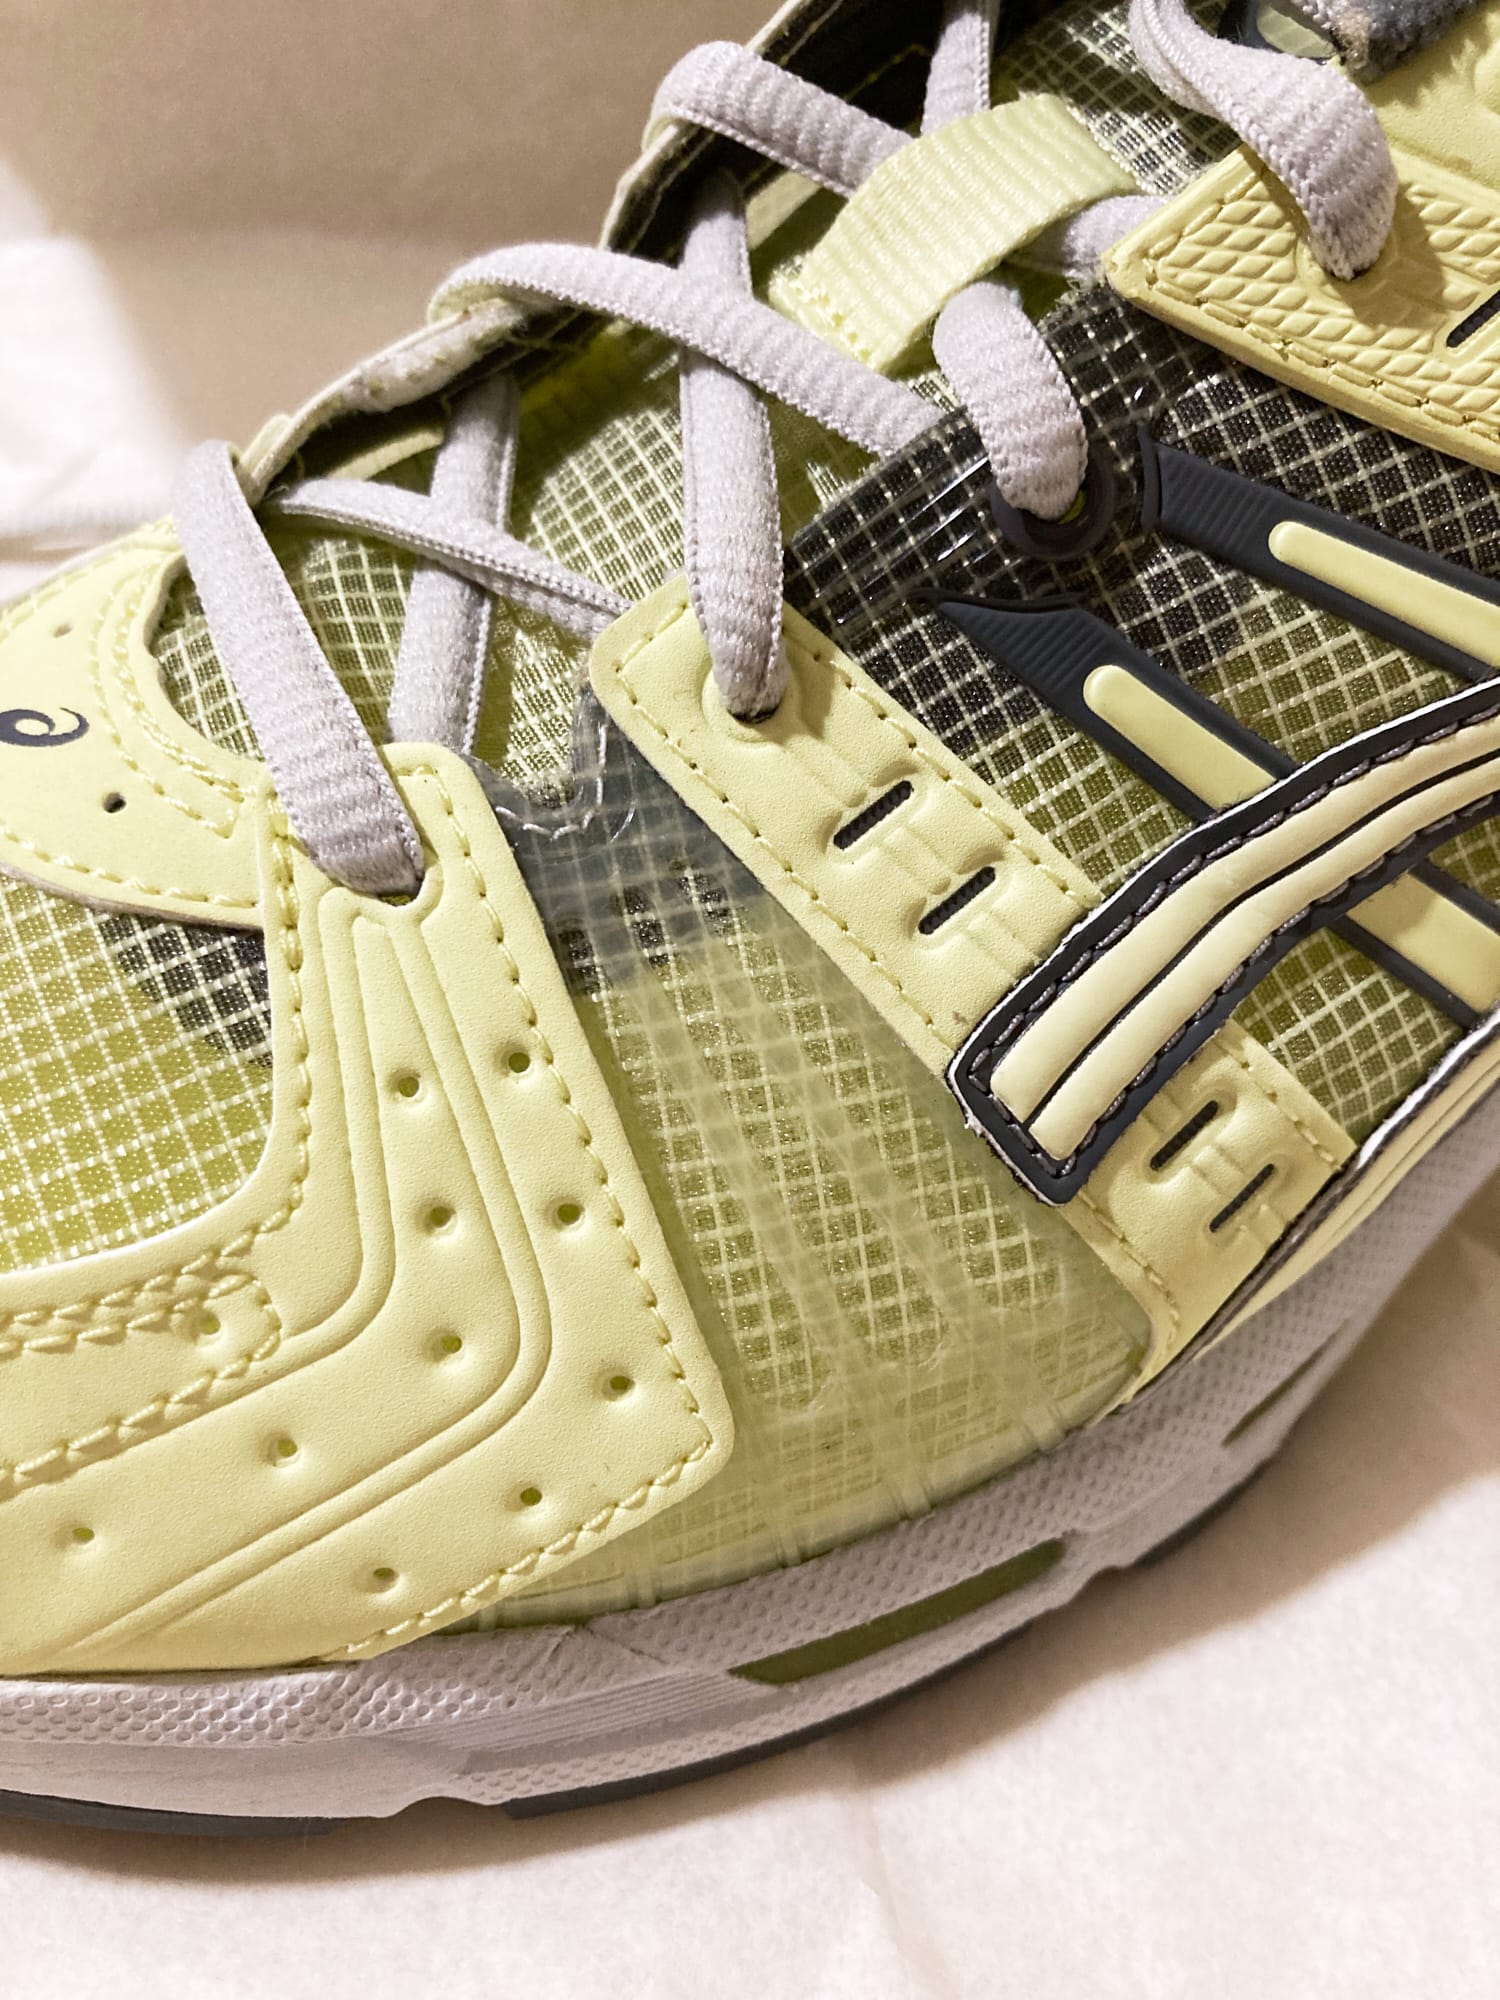 Asics Gel-Kinsei OG Huddle Yellow sneakers - US mens size 9.5 EU 43.5